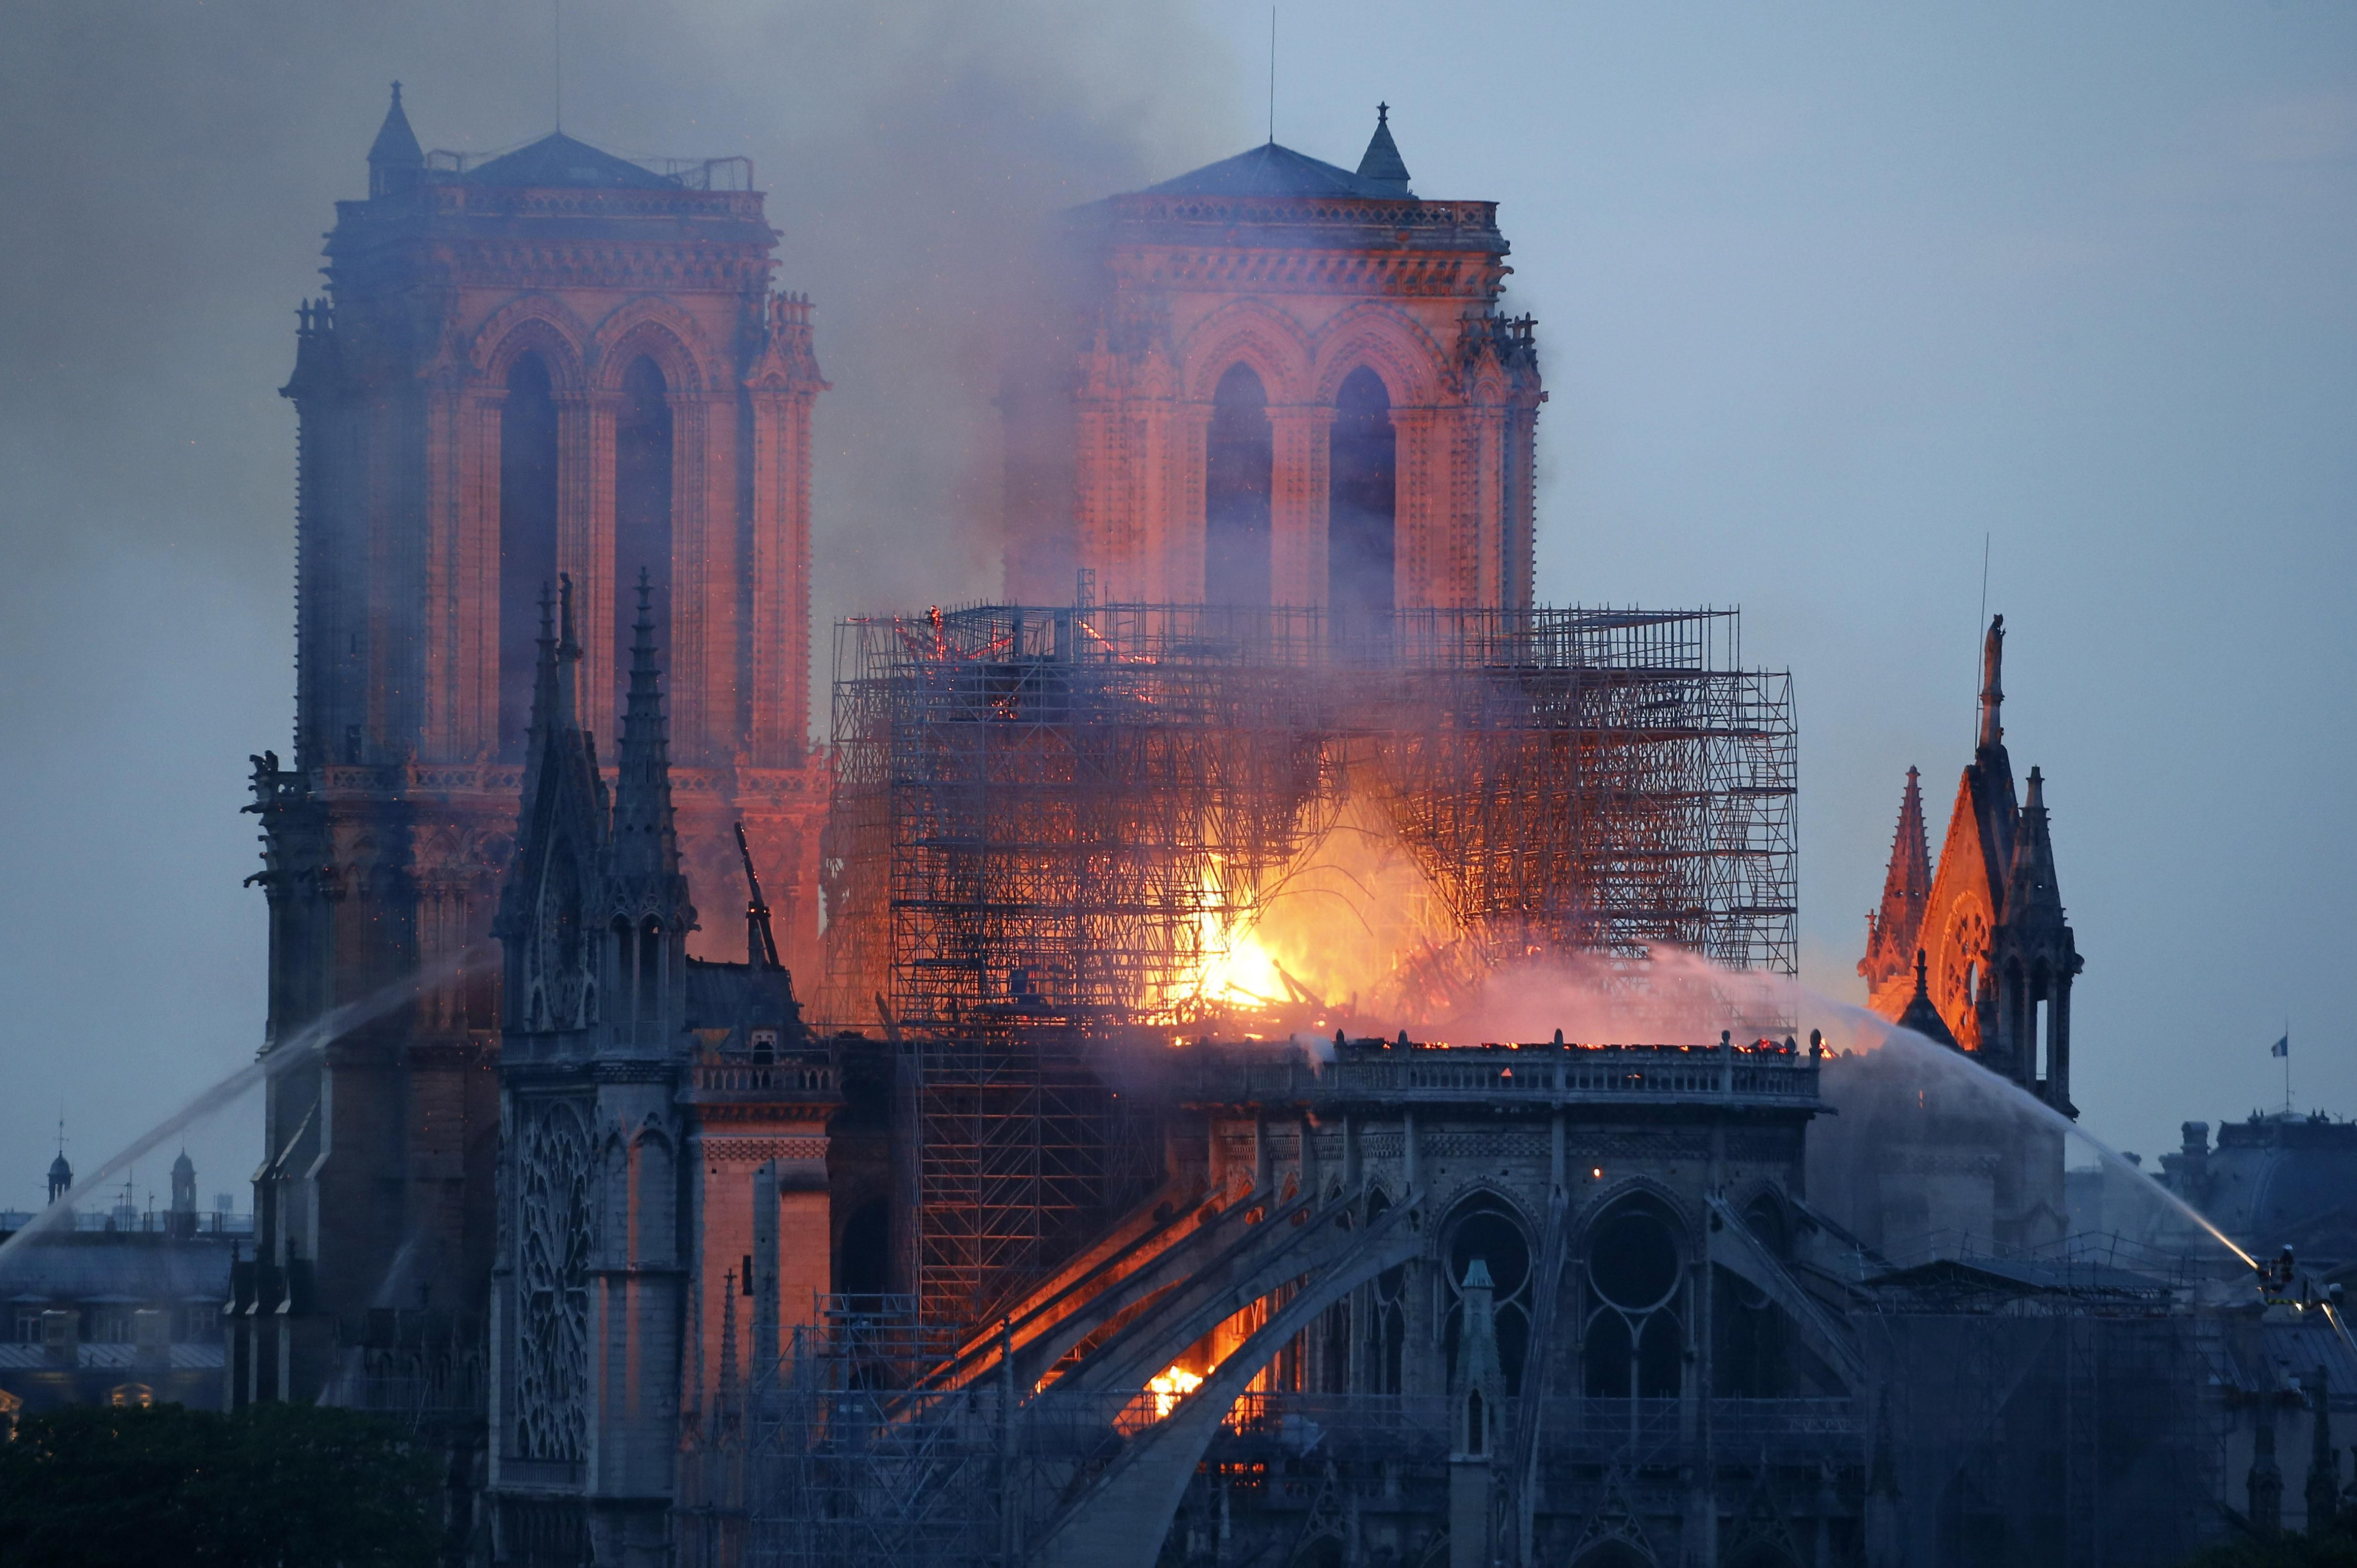 "Горит сердце Парижа": реакция Украины на пожар в Нотр-Дам де Пари